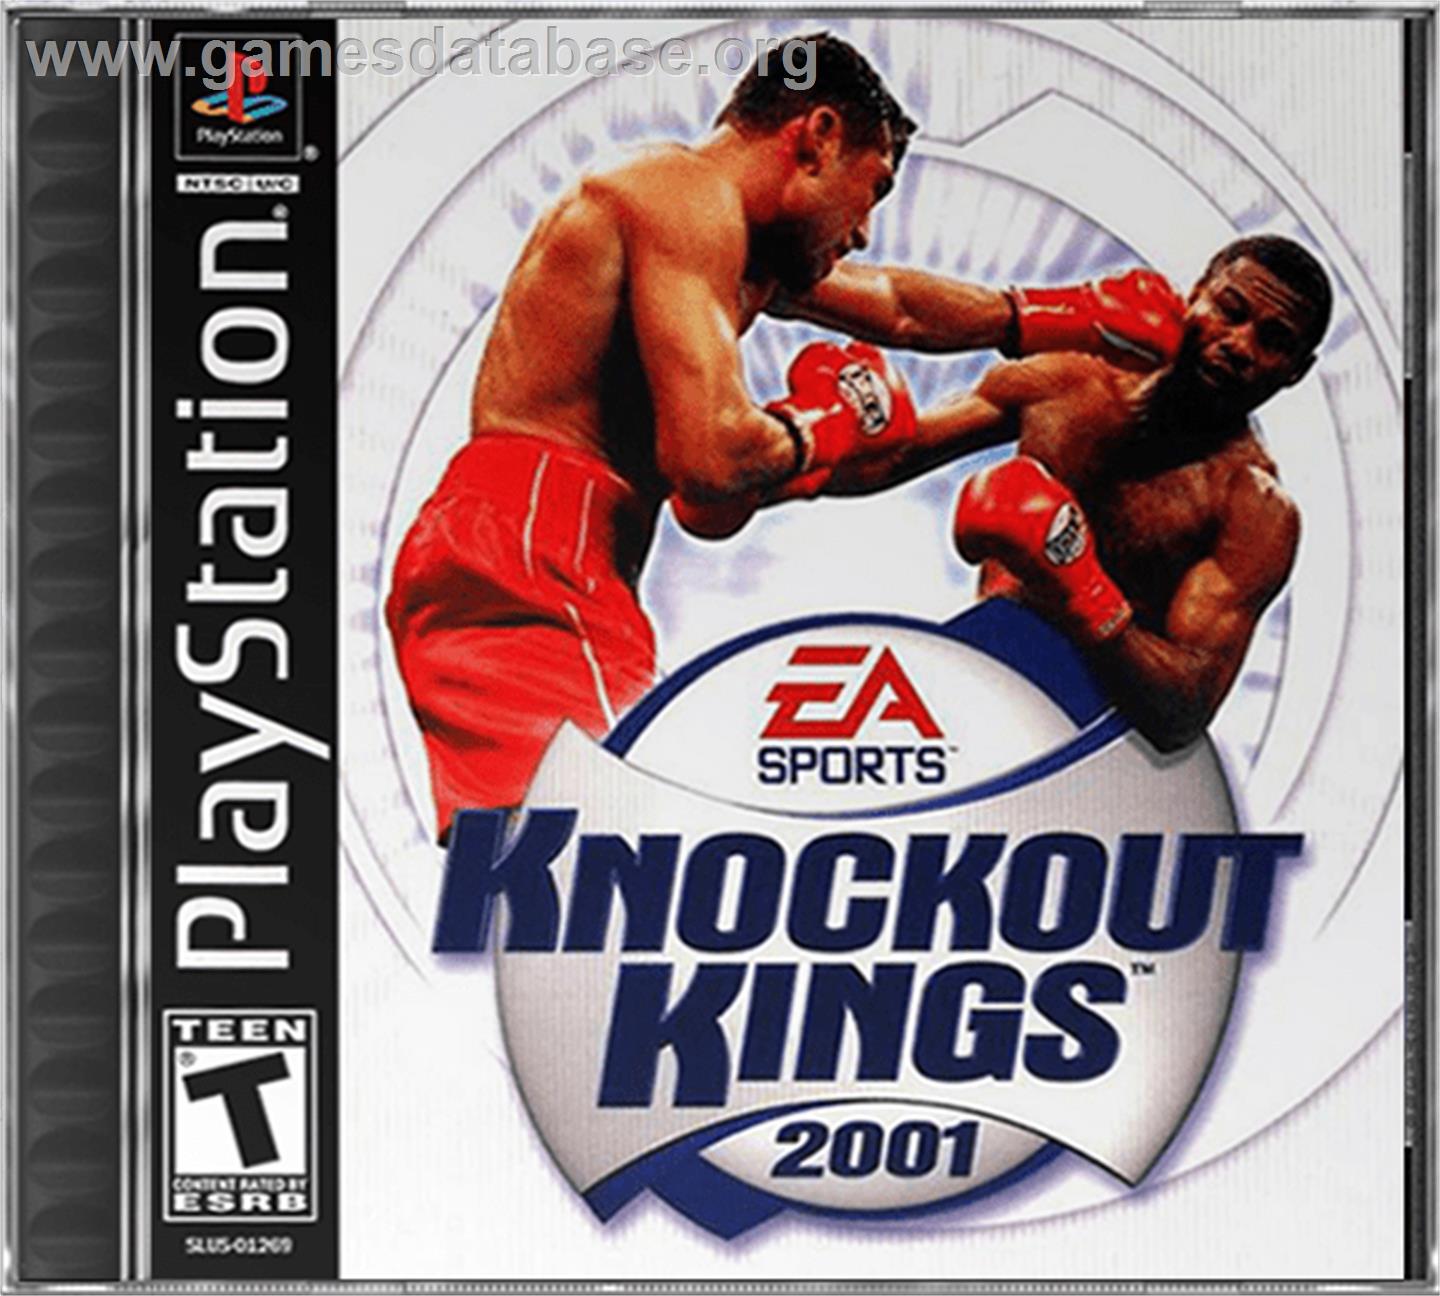 Knockout Kings 2001 - Sony Playstation - Artwork - Box